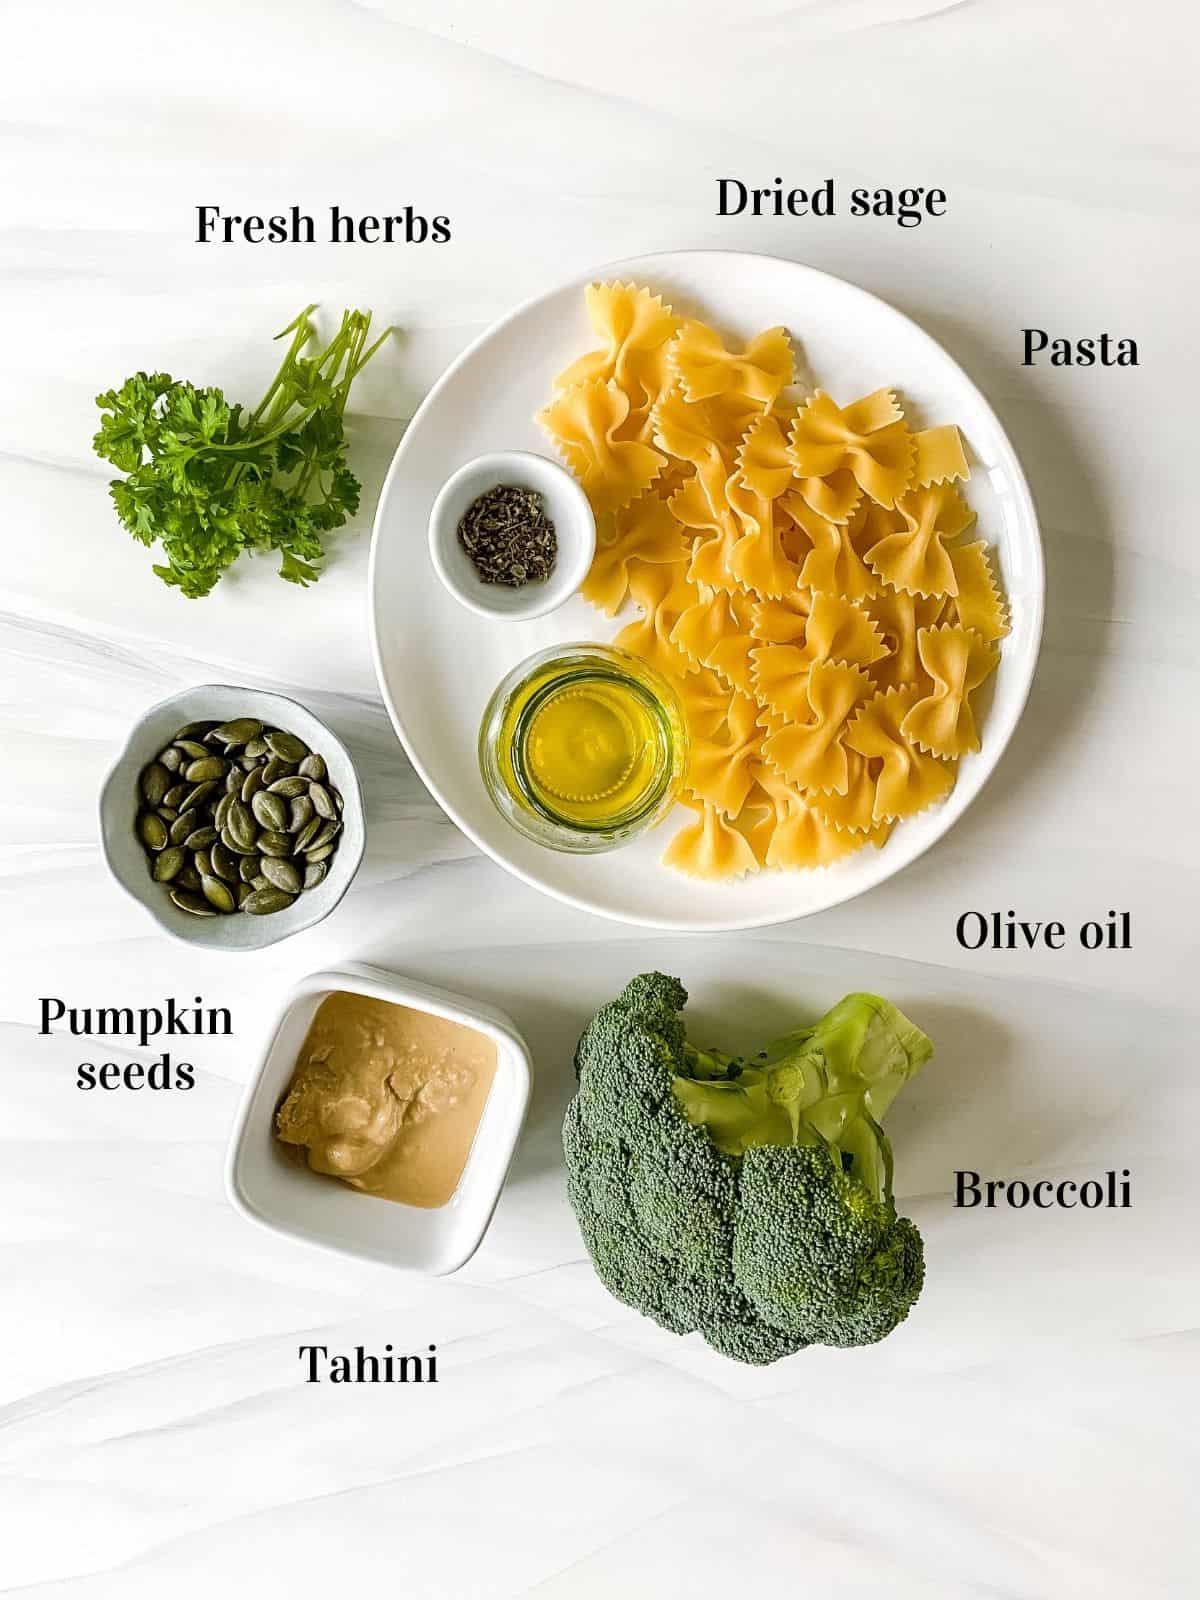 tahini, broccoli, pasta, sage, olive oil. 